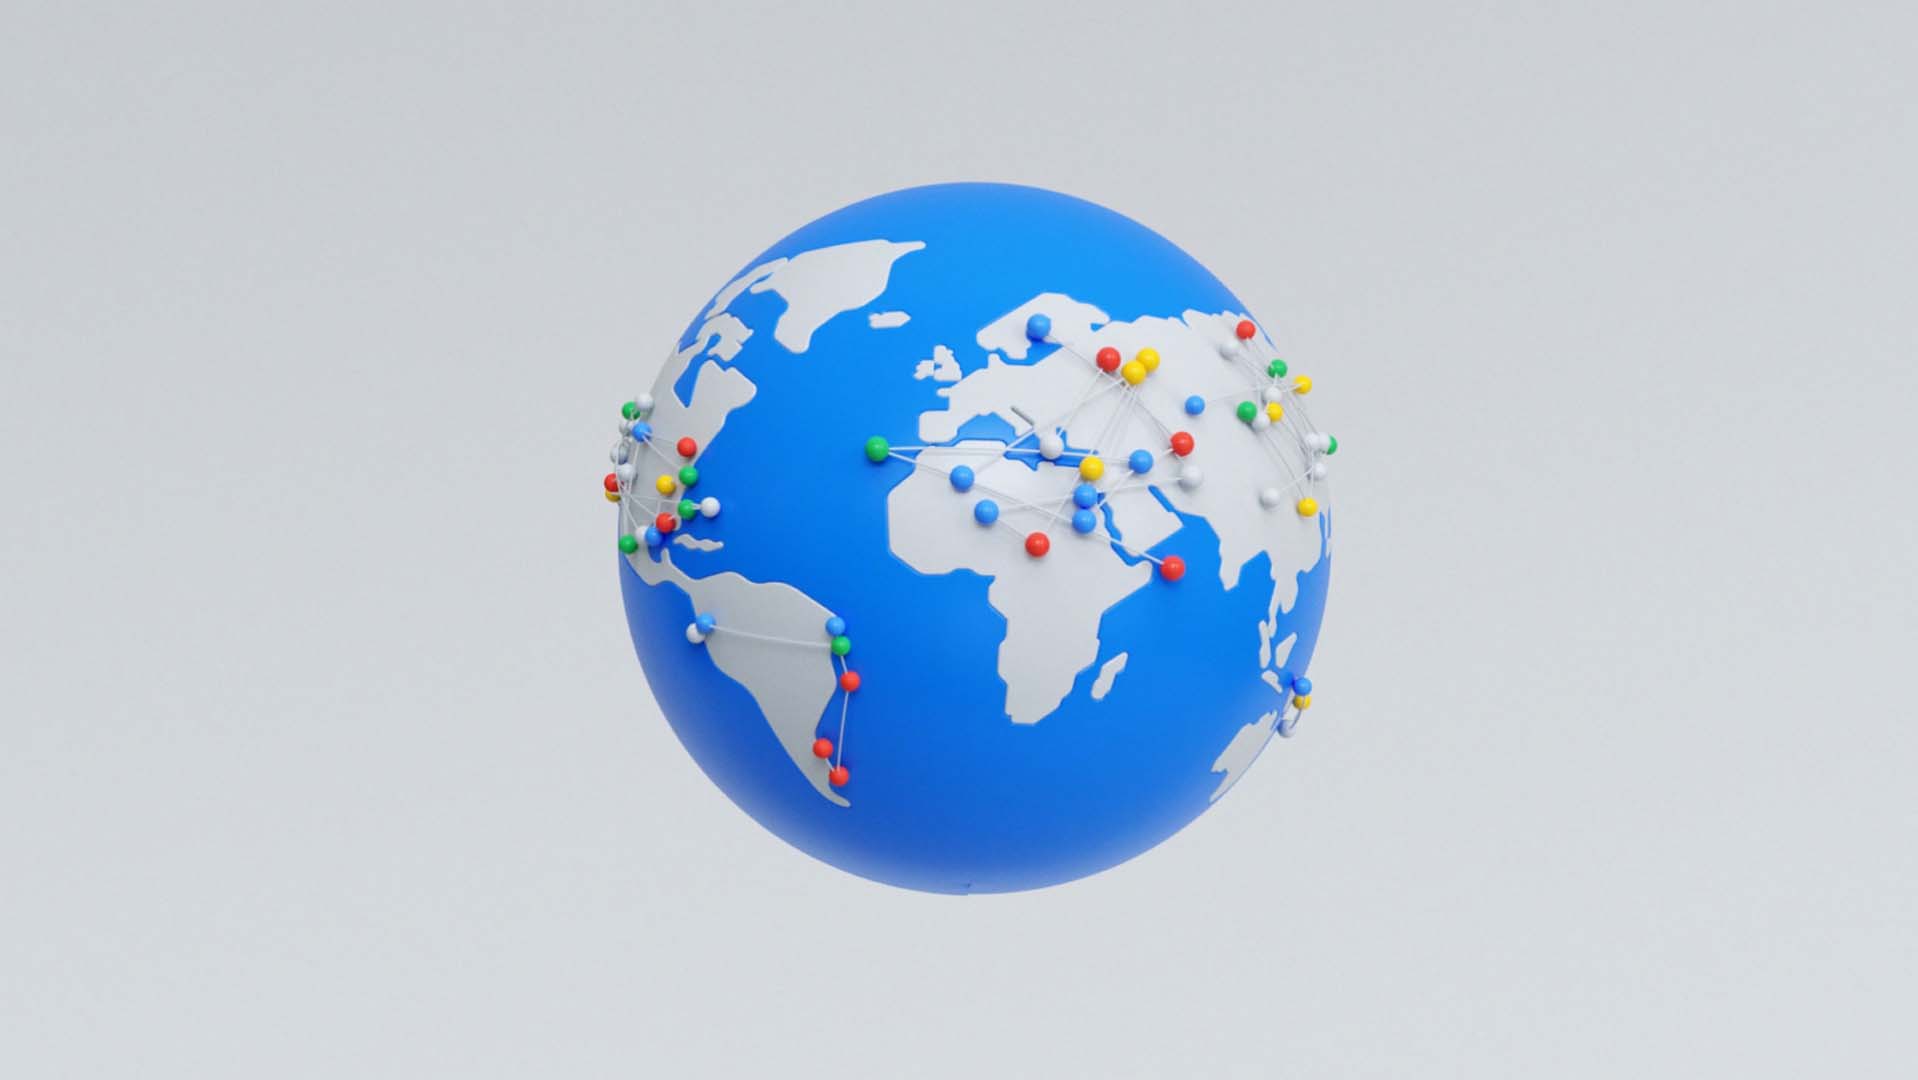 design-motion-3d-photography-octane-redshift-art-visual-animation-render-style-graphic-digital-federicopicci-nerdo-google-cloud-california-space-pop-set-toy-minimal-clip-world-map-pin-globe